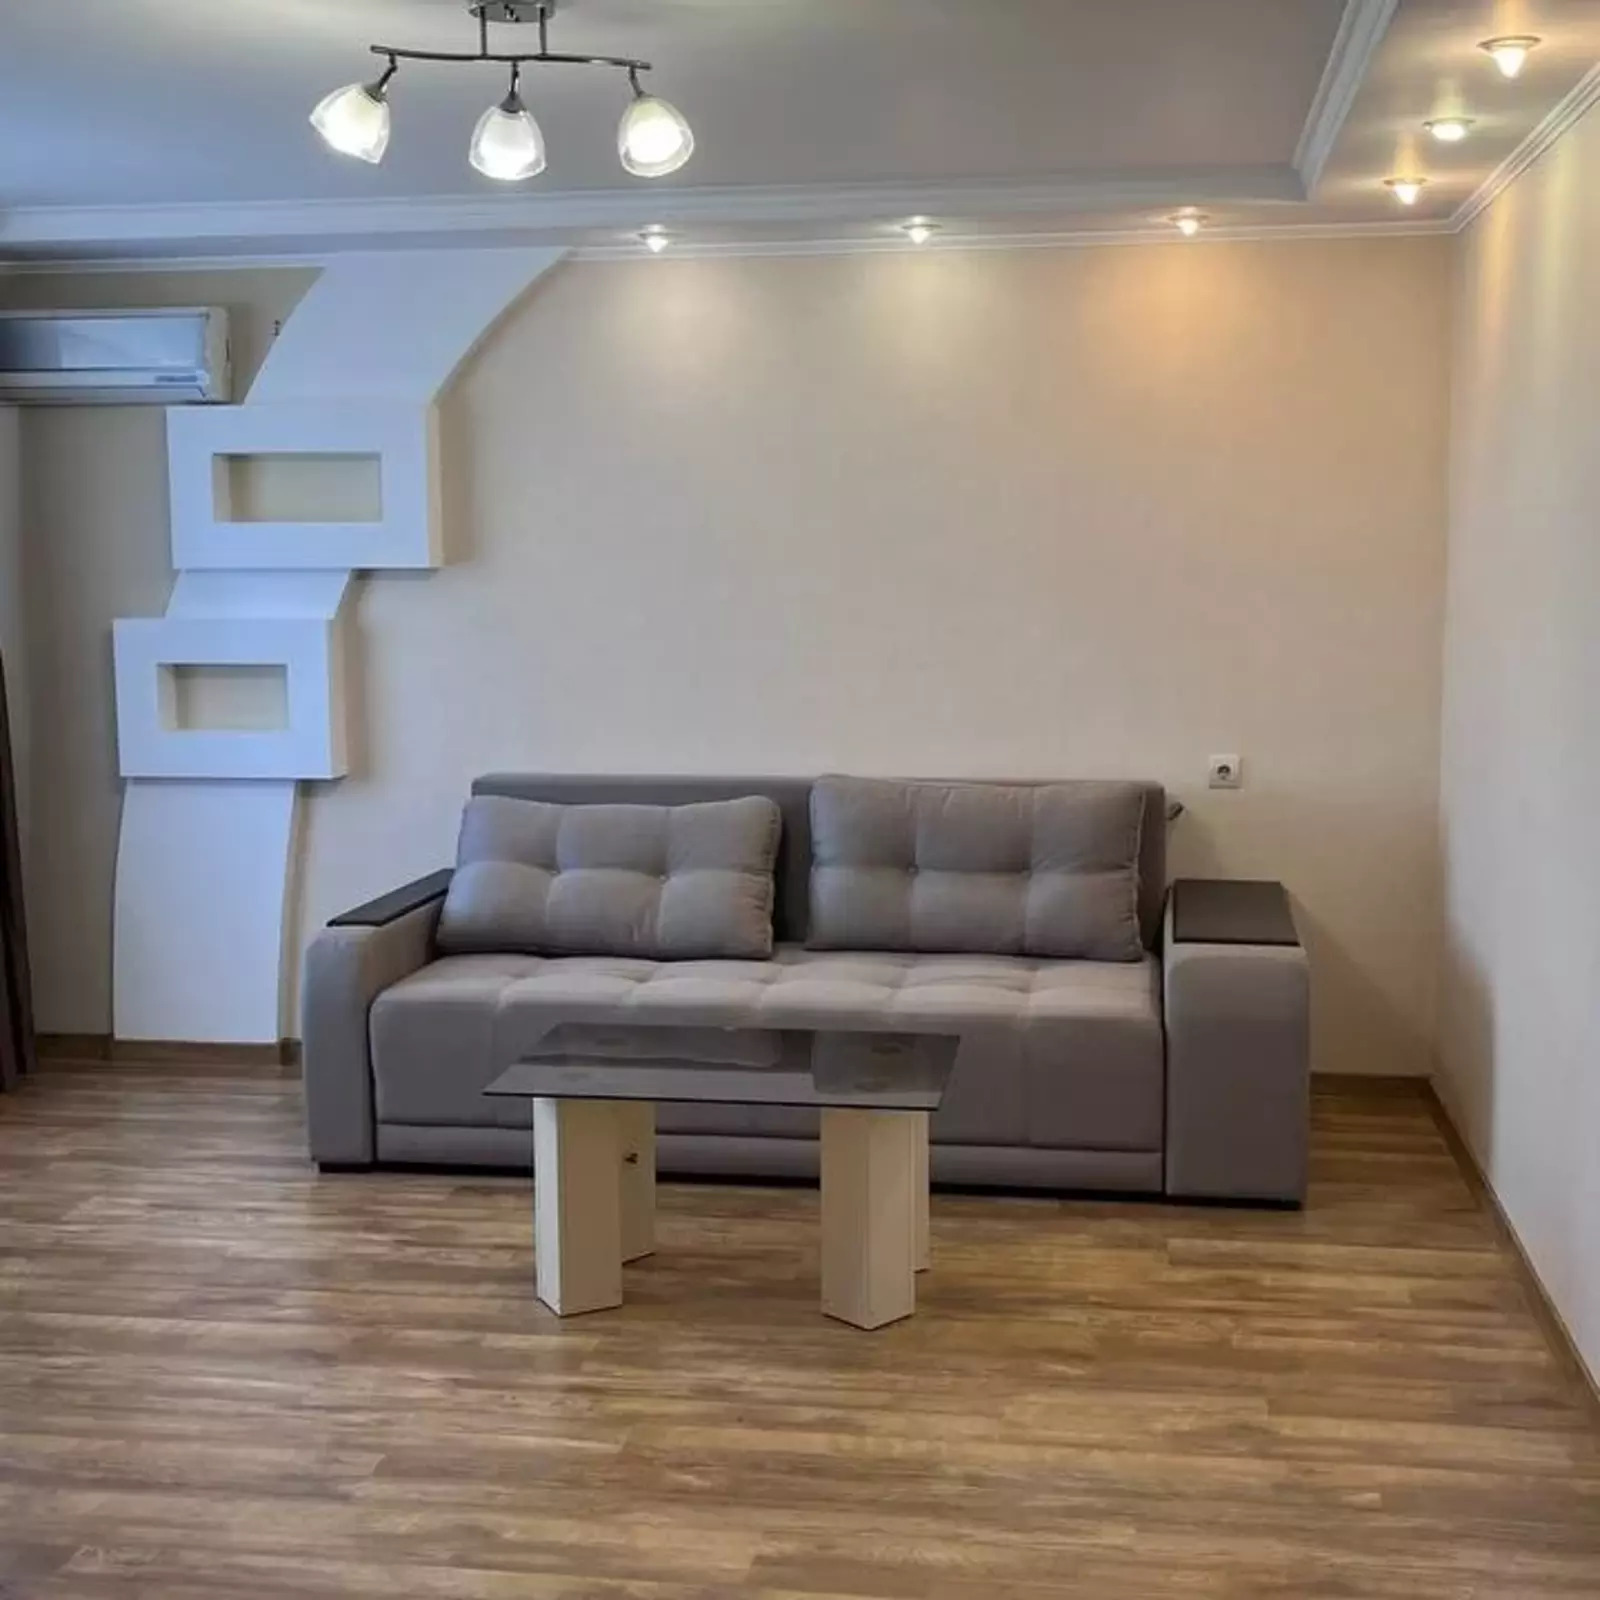 Сдается двухкомнатная квартира на Леваде в новом доме Объект № 11959063